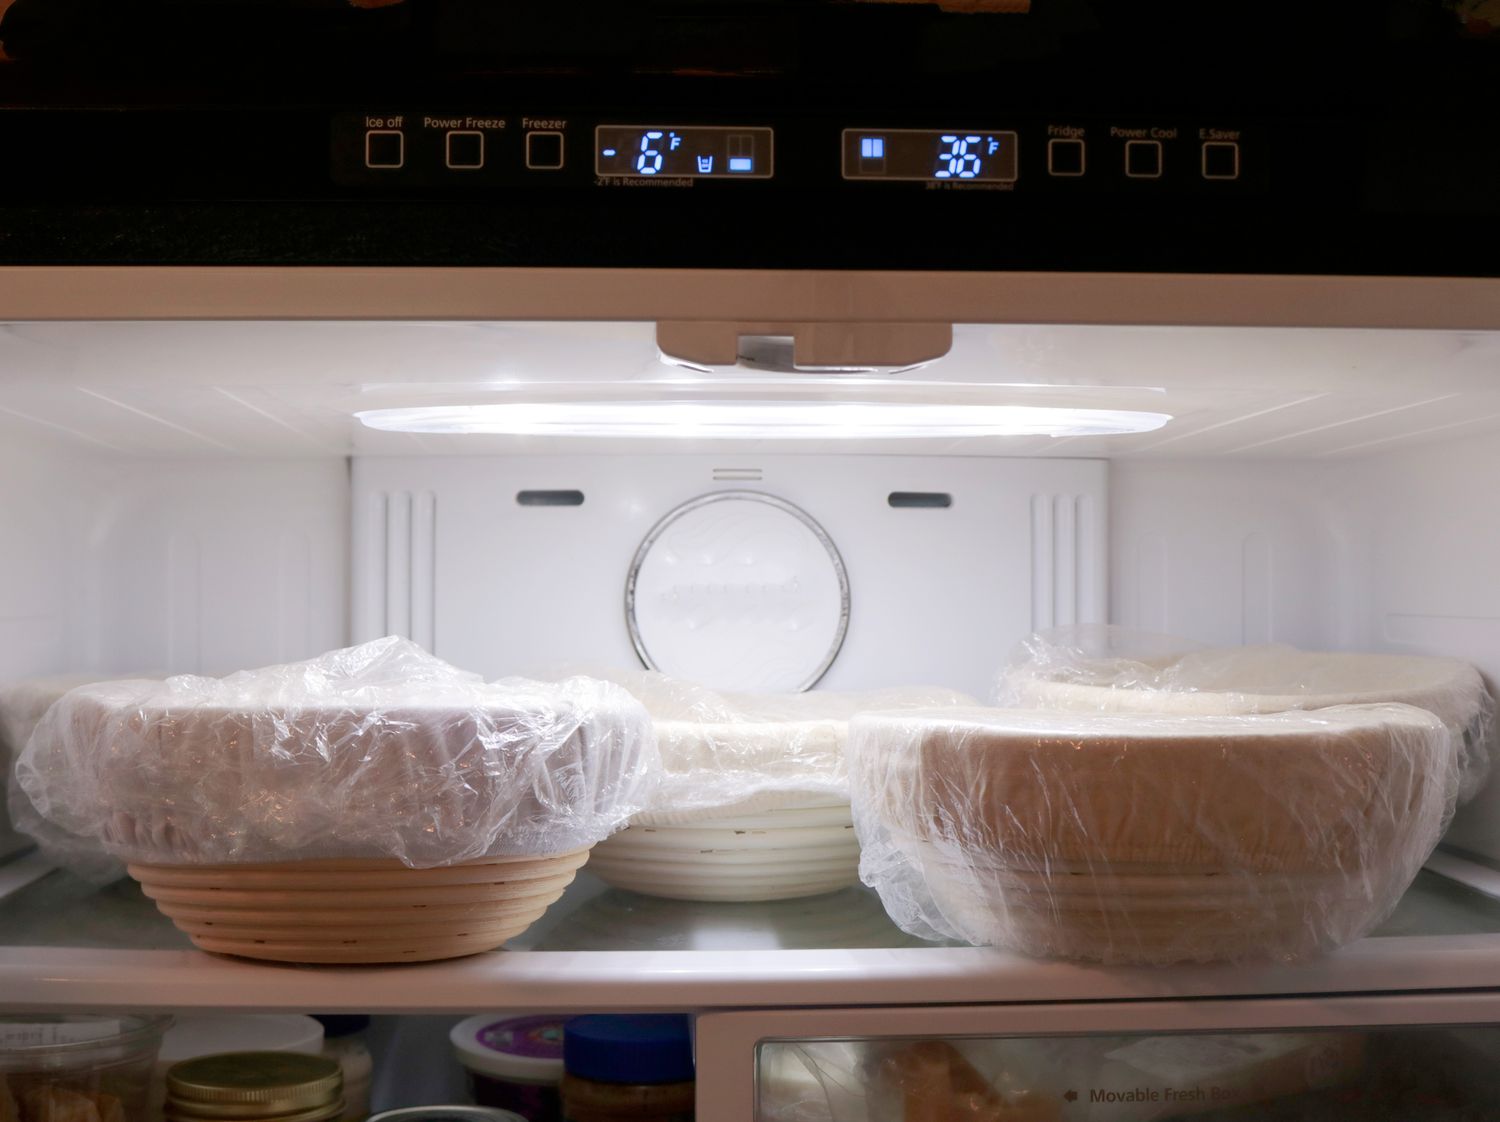 five bread proofing baskets on a shelf in a refrigerator